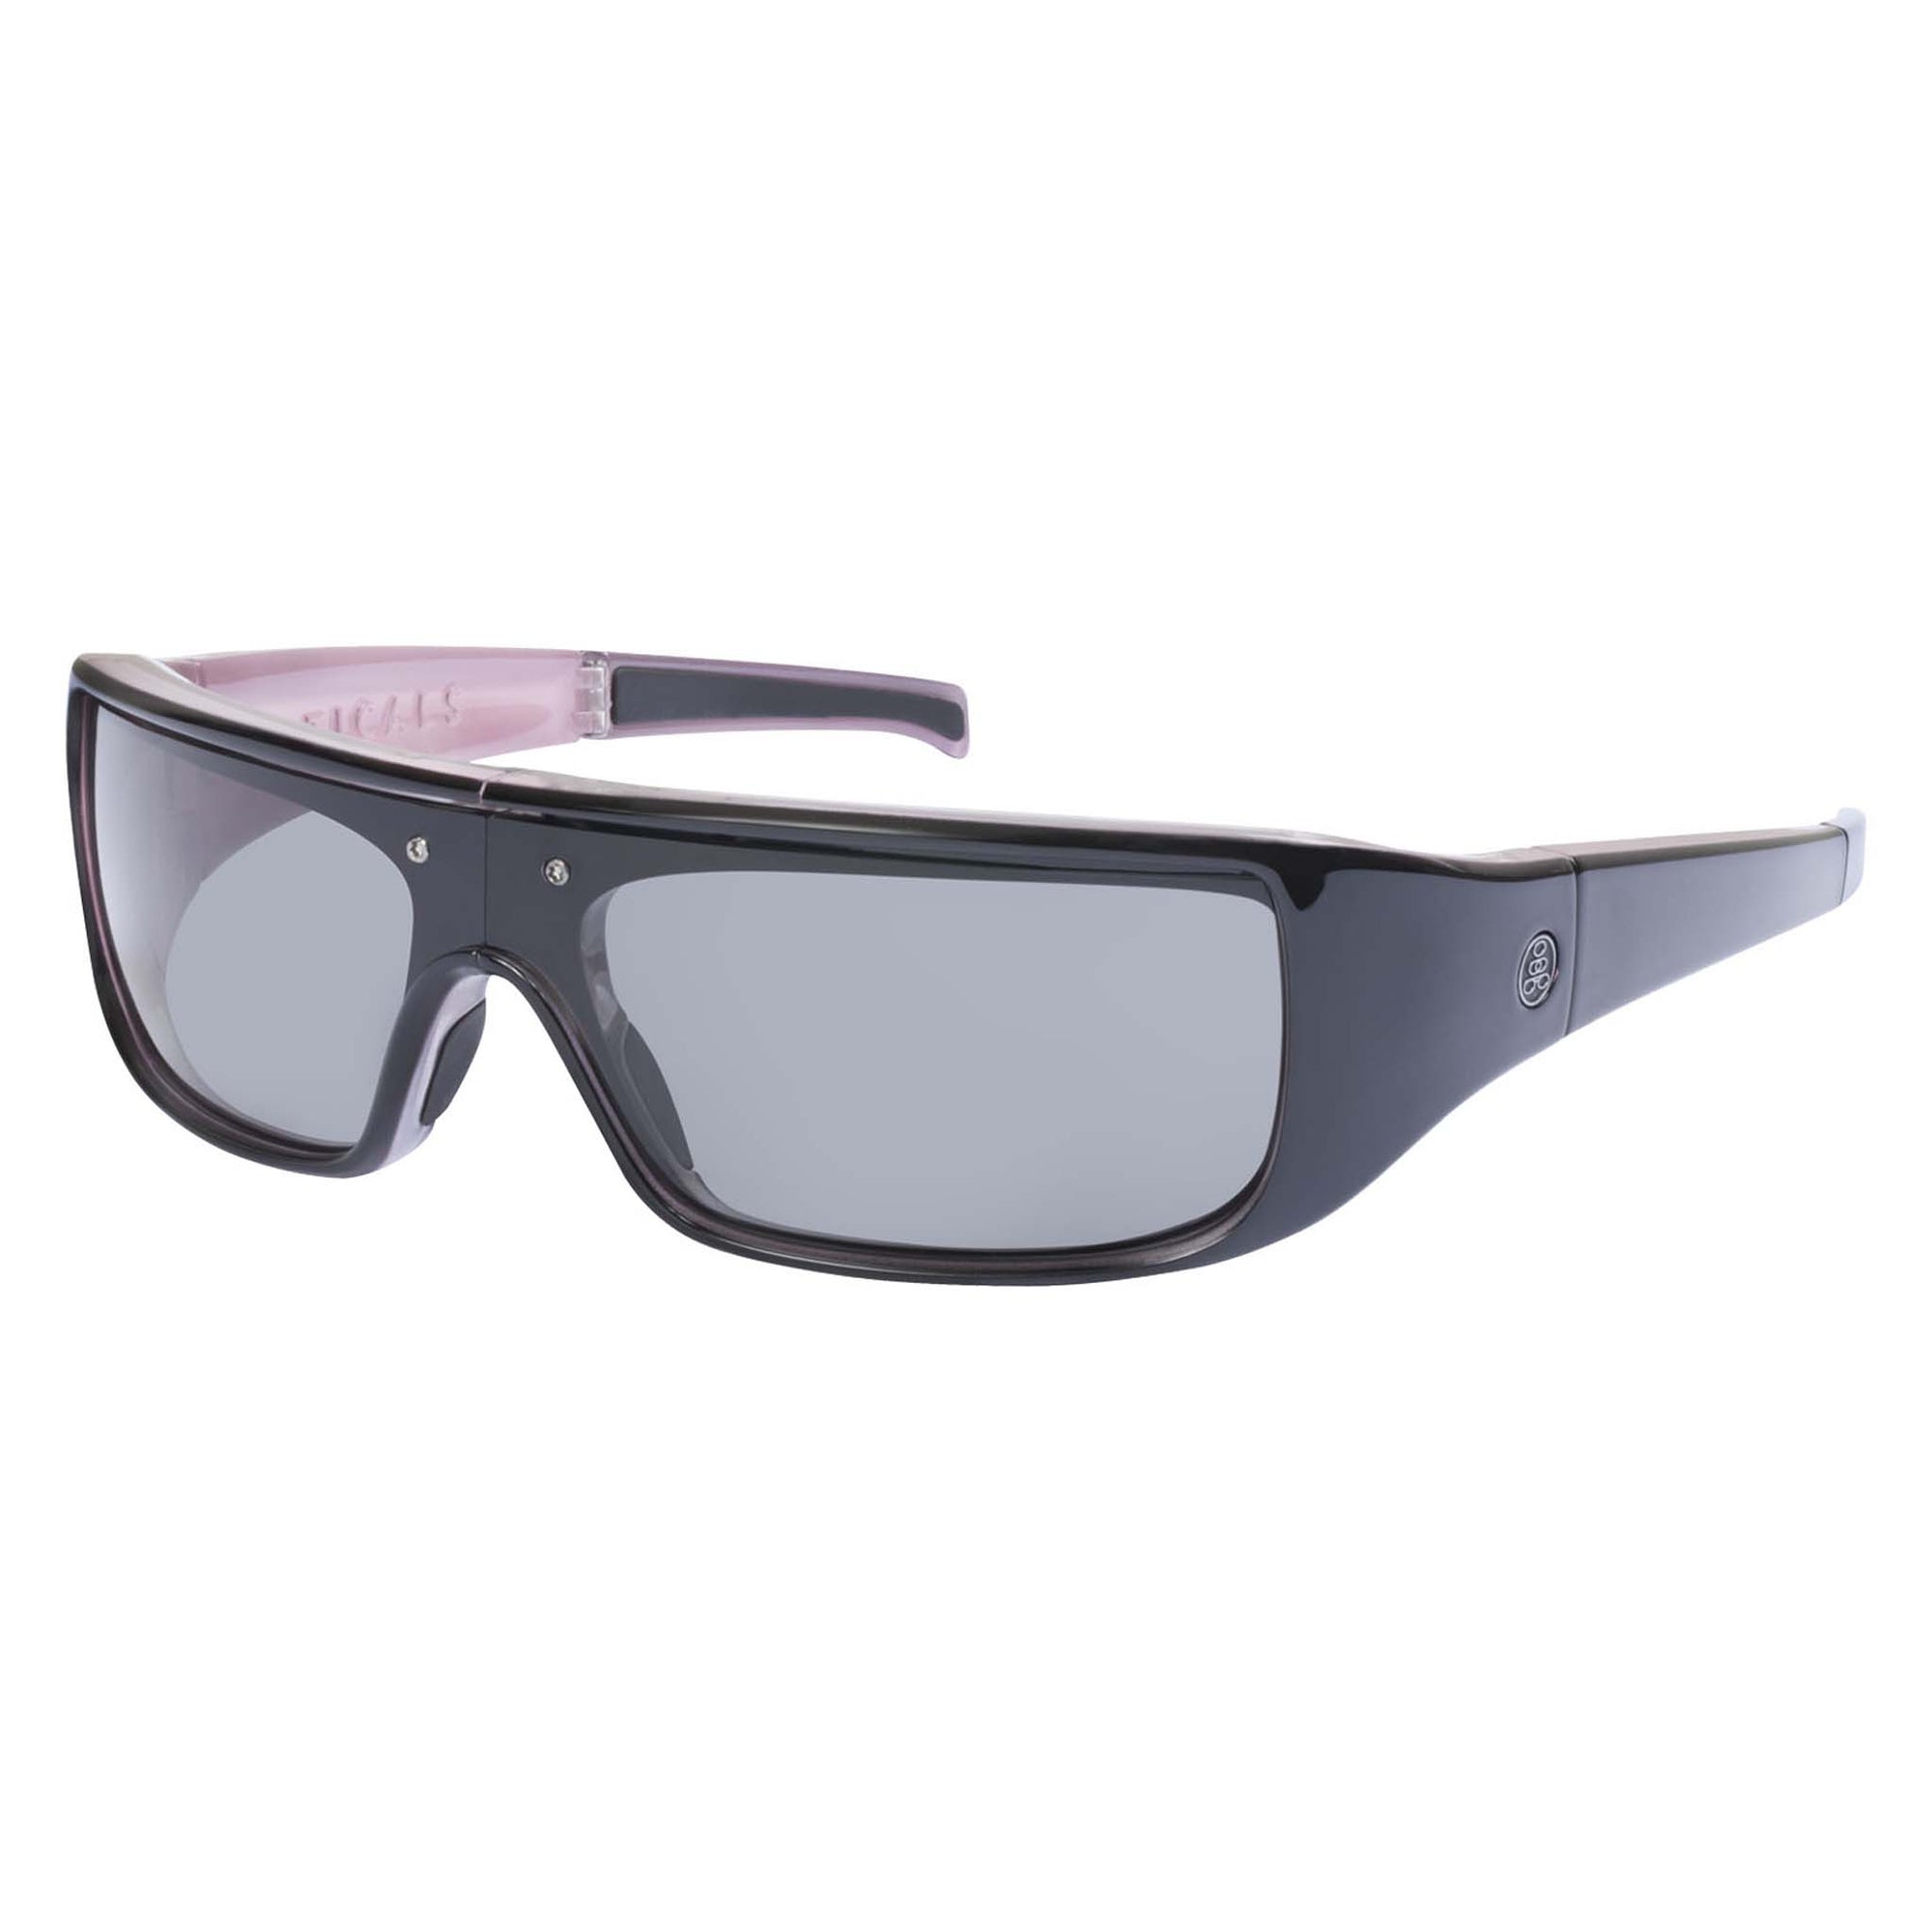 Popticals, Premium Compact Sunglasses, PopGear, 040051-KLGP, Polarized Sunglasses, Gloss Black over Pink Crystal Frame , Gray Lenses, Glam View